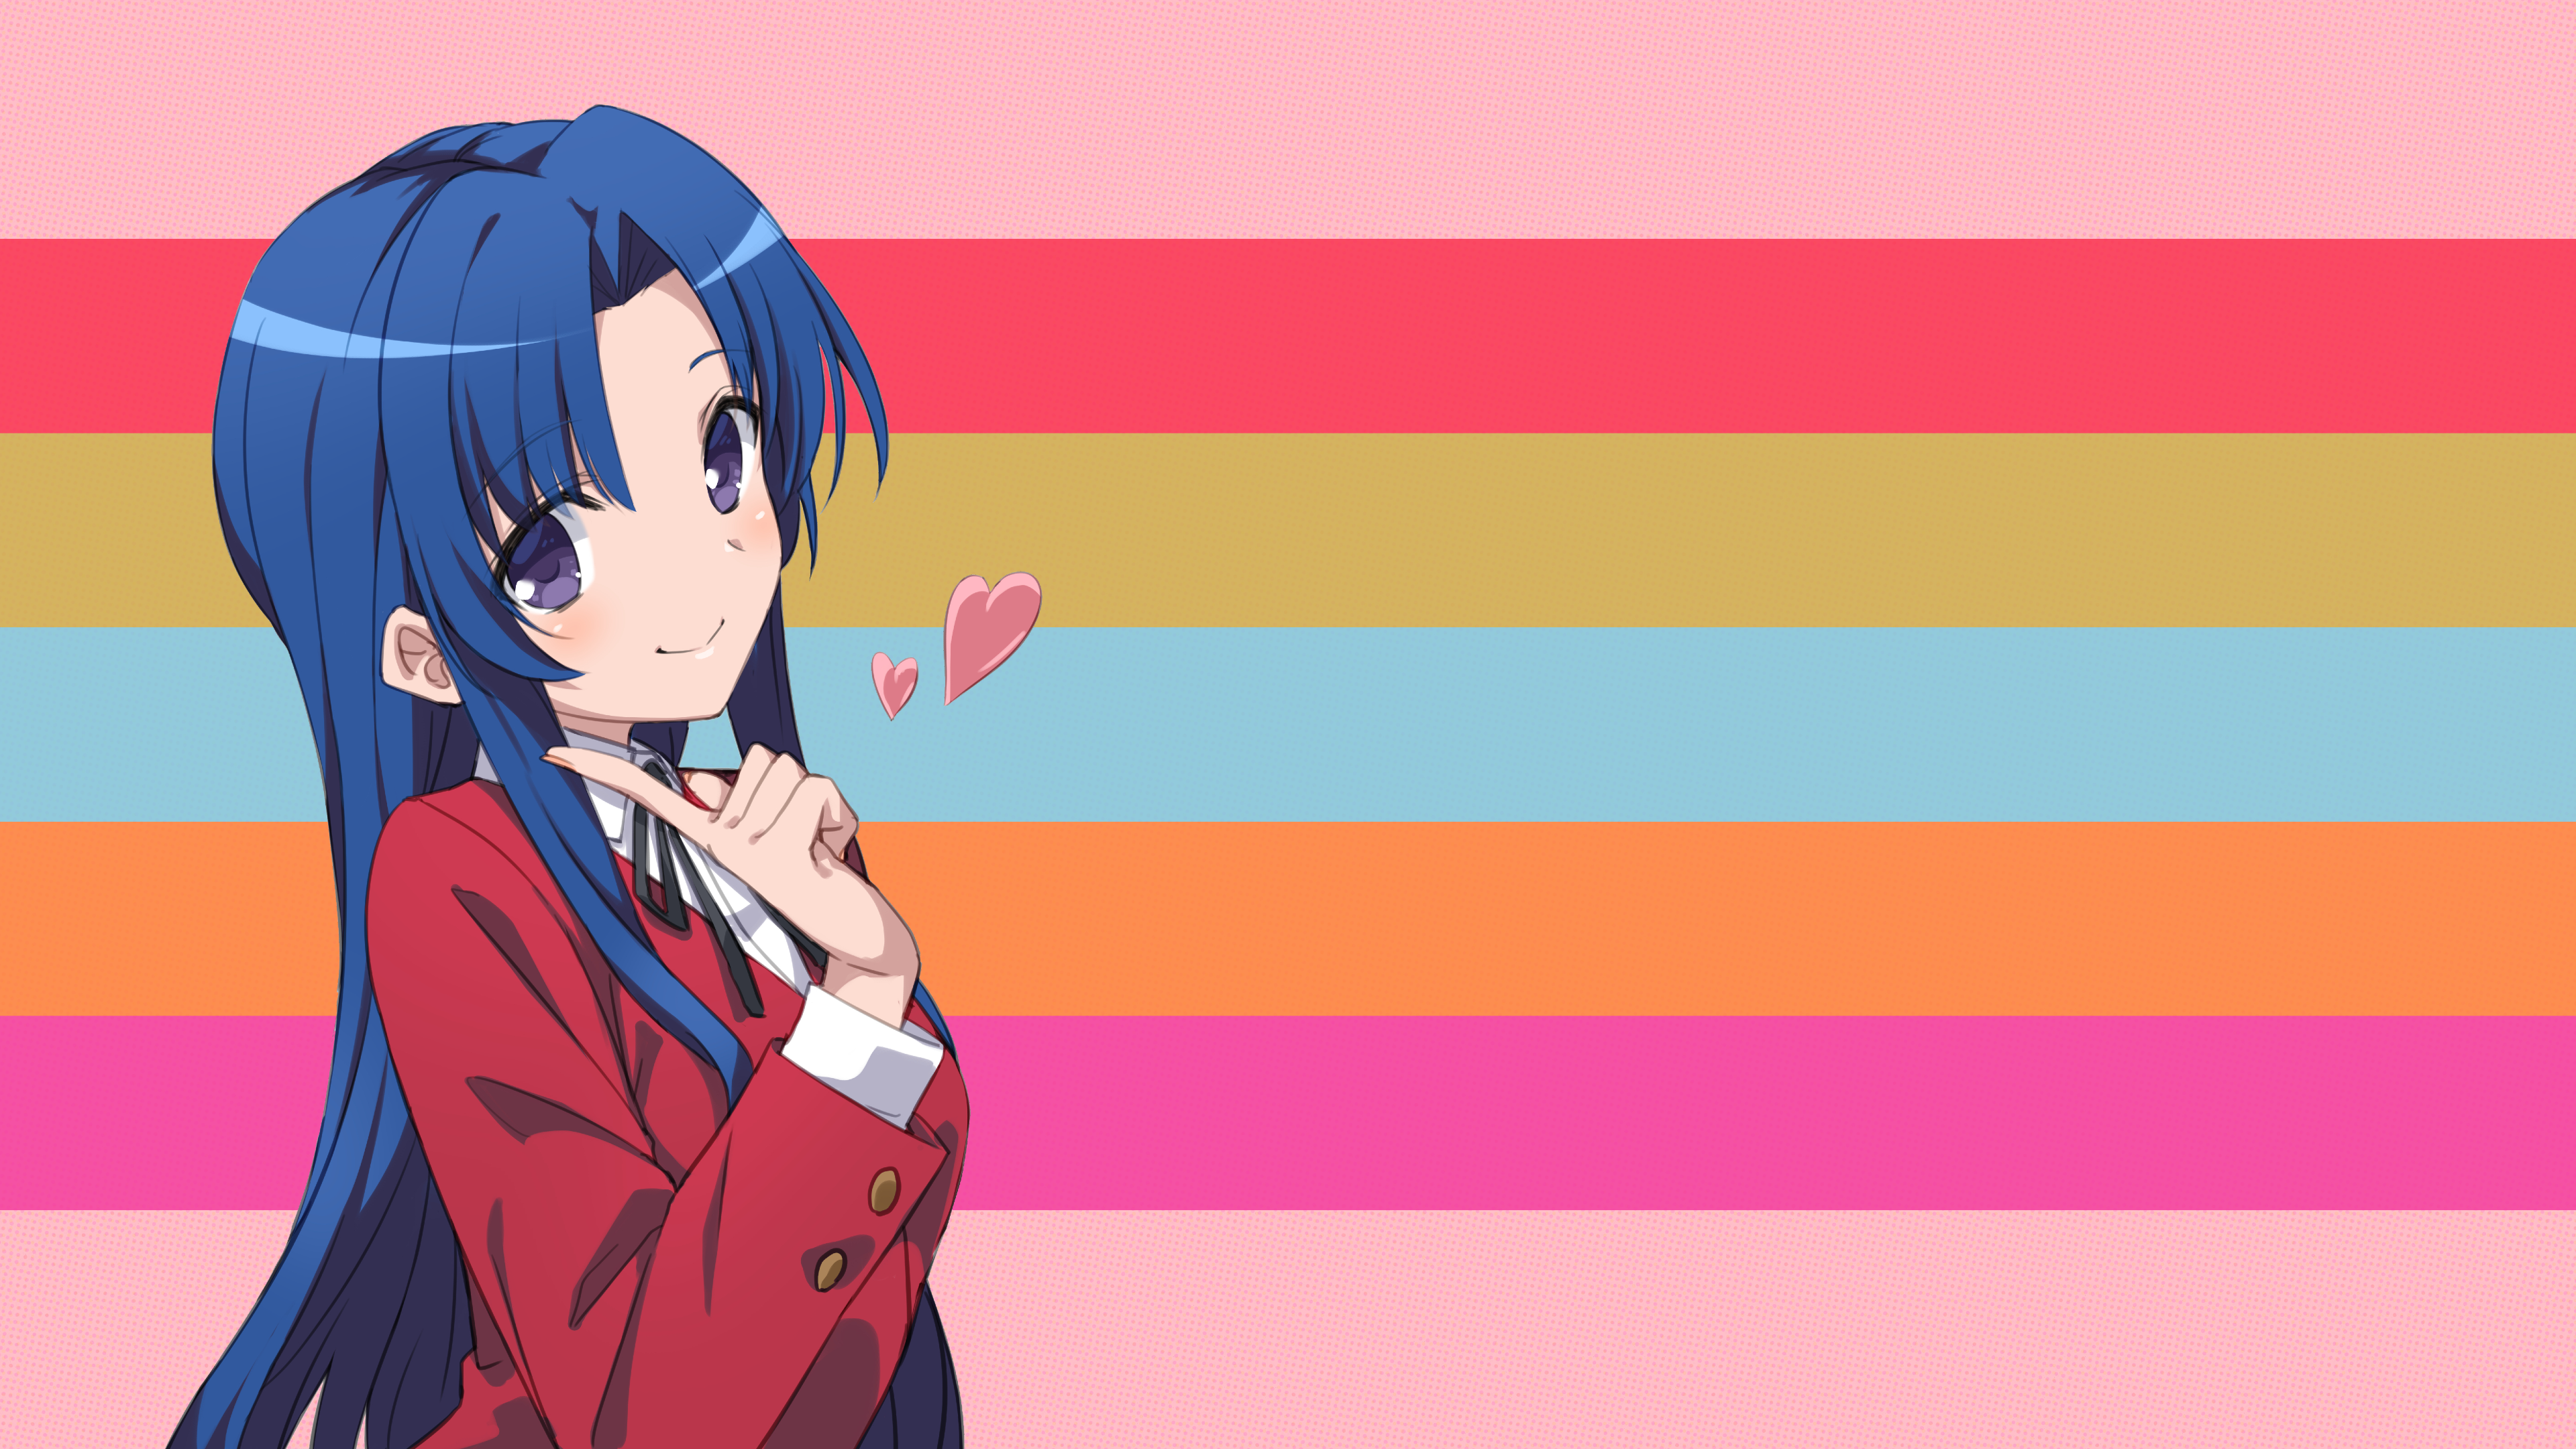 Anime Girls Anime Toradora Long Hair Blue Hair Red Jackets Jacket Hearts Heart Design Looking At Vie 3840x2160